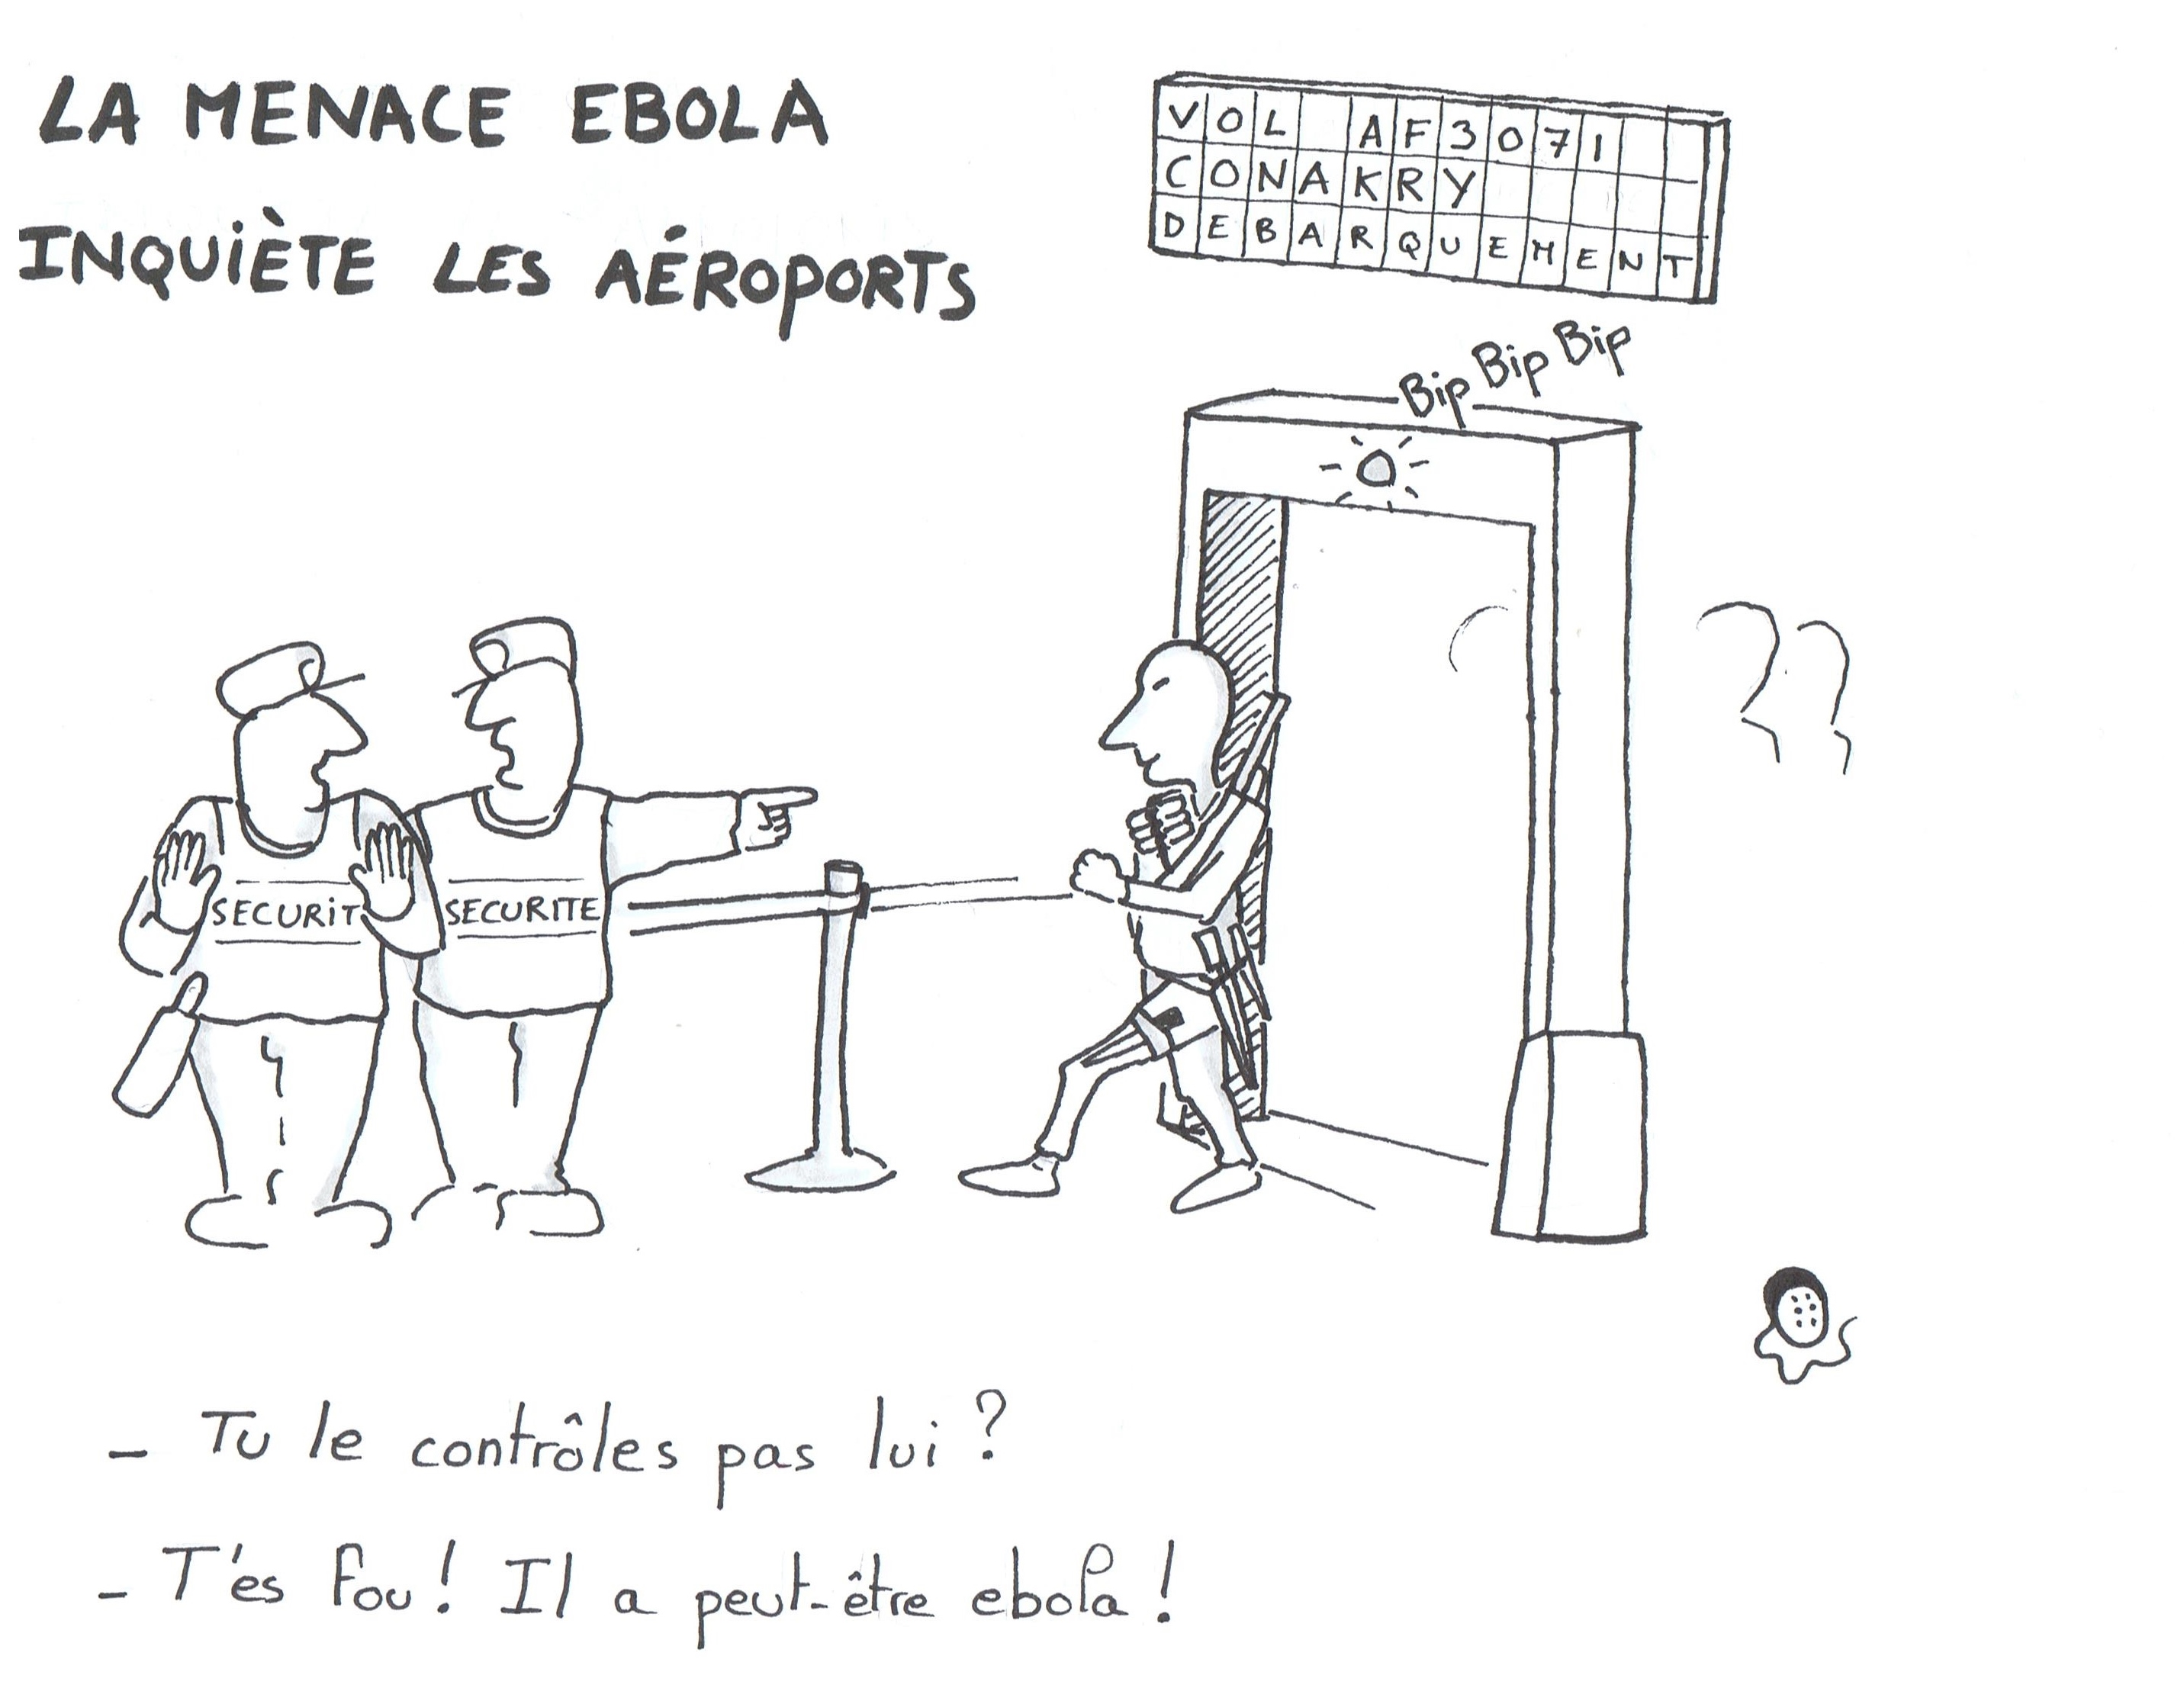 La menace Ebola inquiète les aéroports